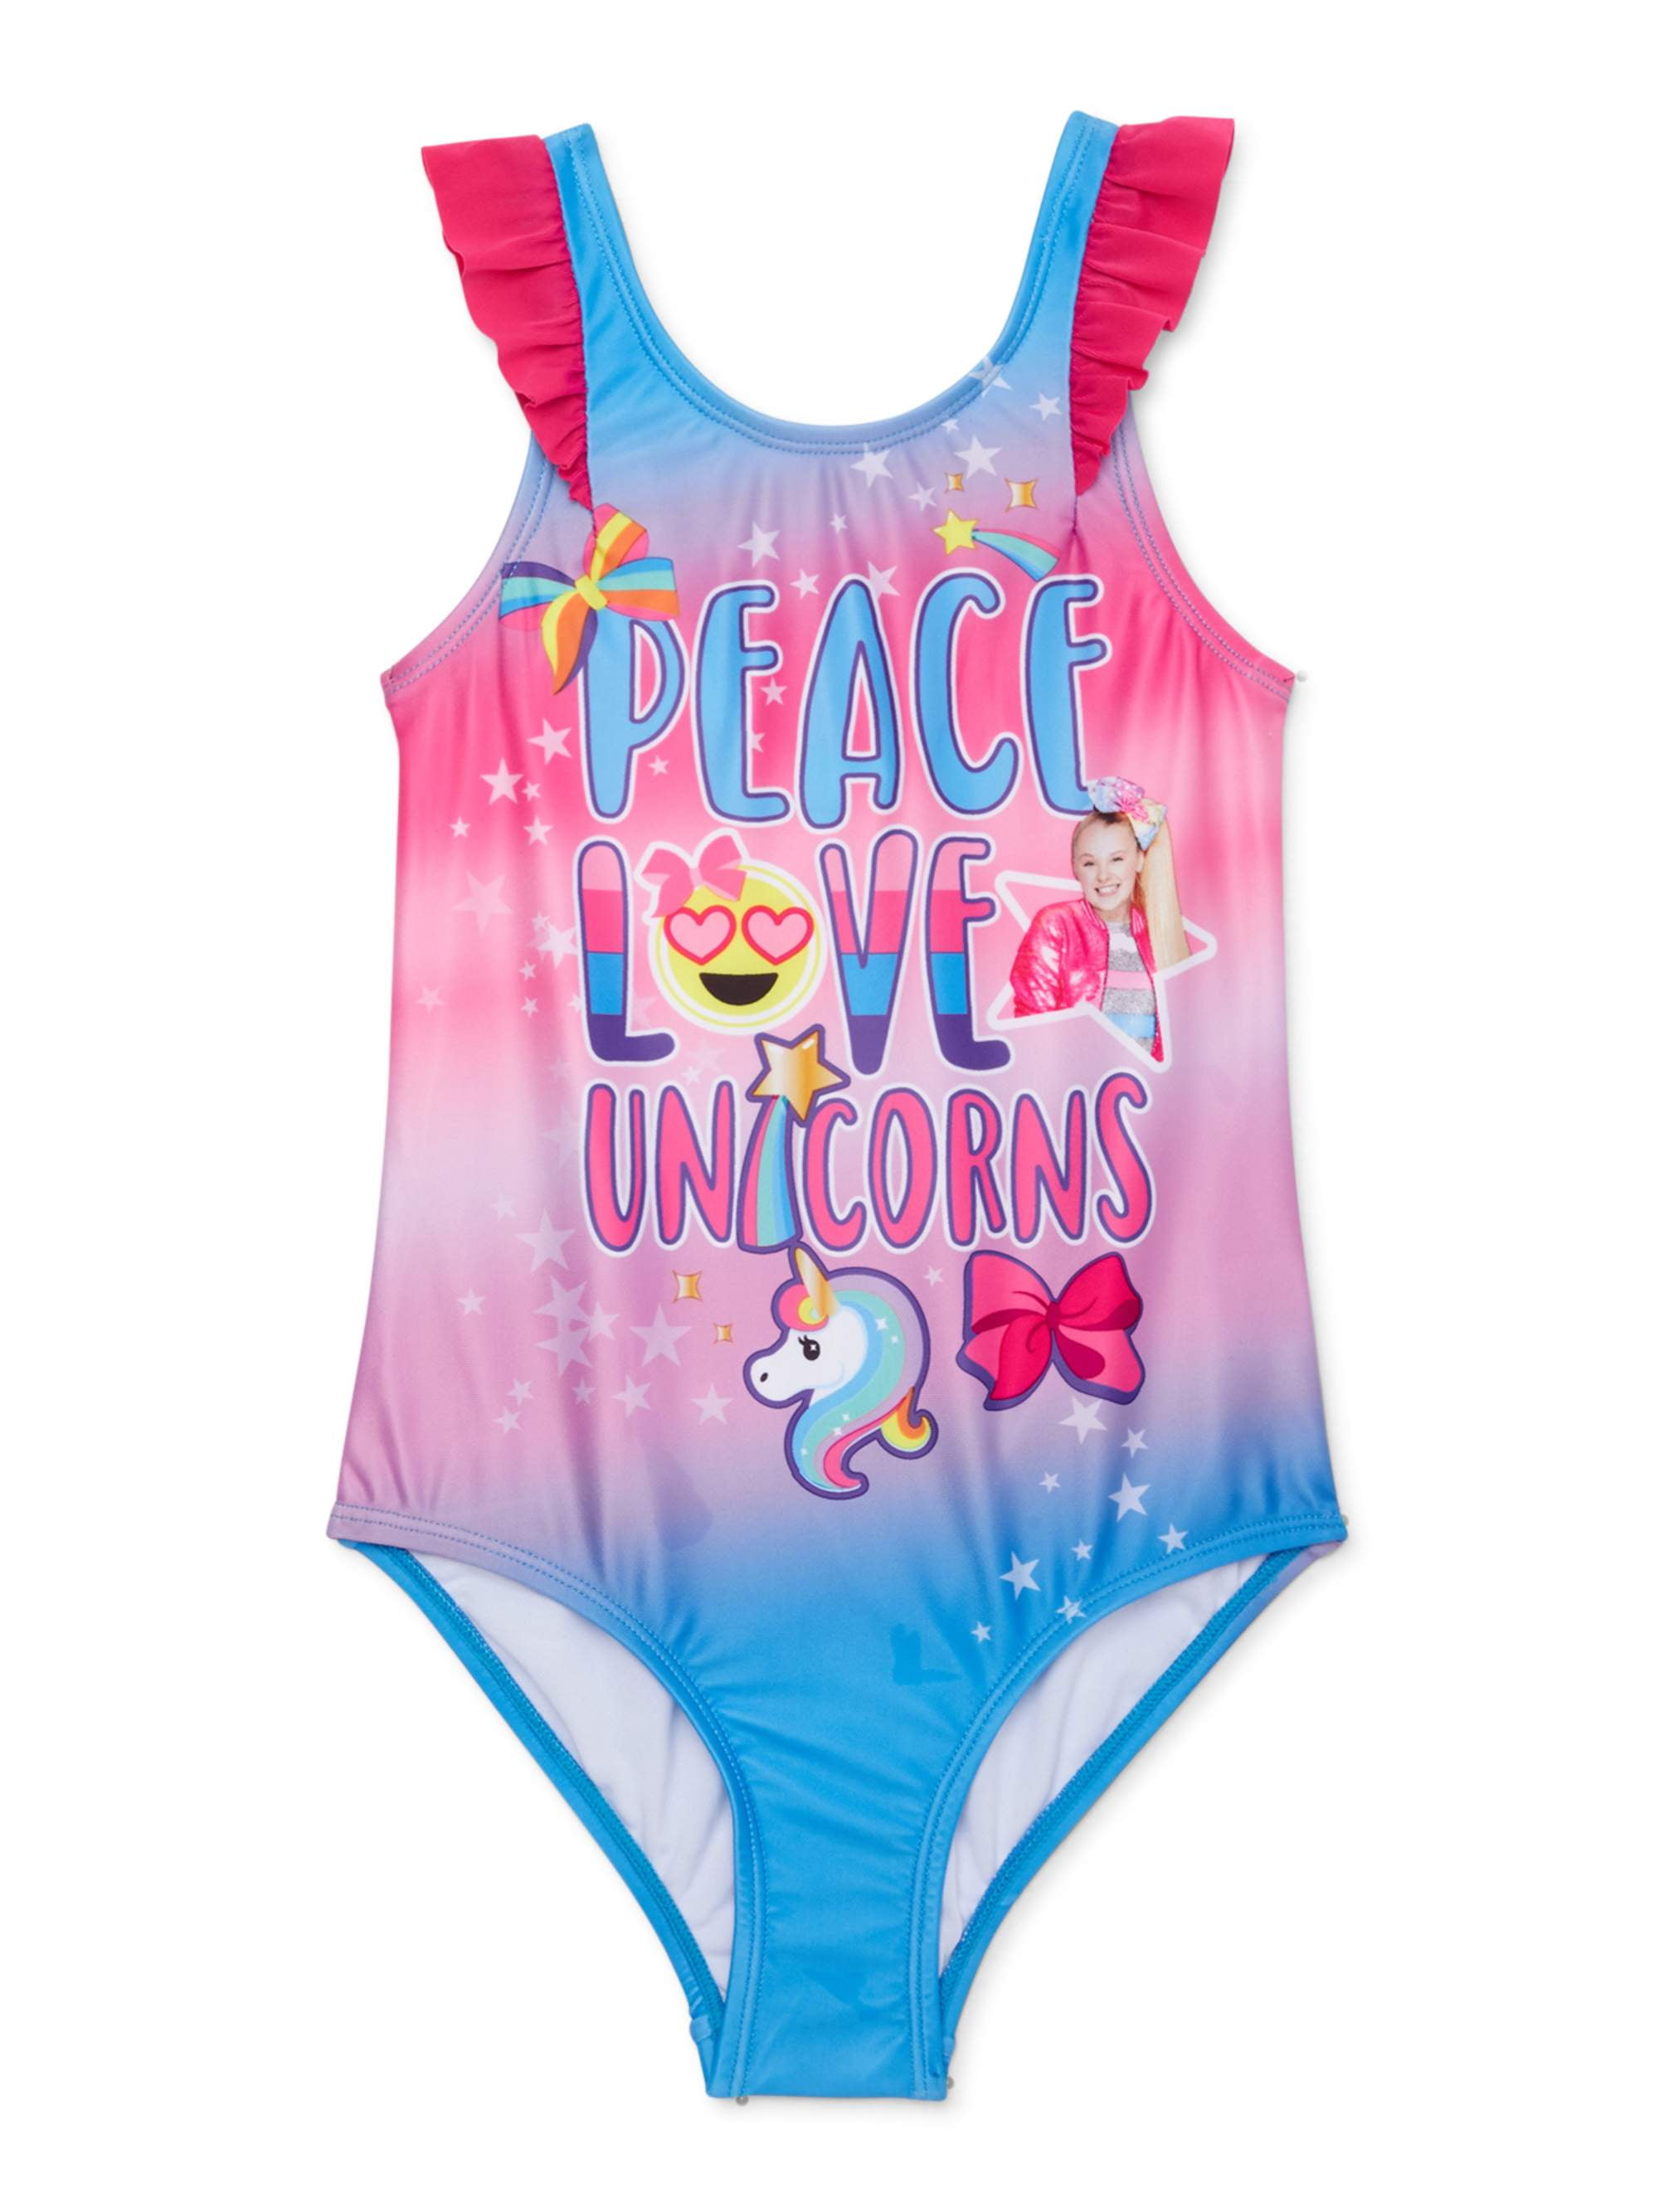 Pink 7-8 Nick jr Product JoJo Siwa Girls Swimsuit One Piece Bathing Suit UPF 50+ 